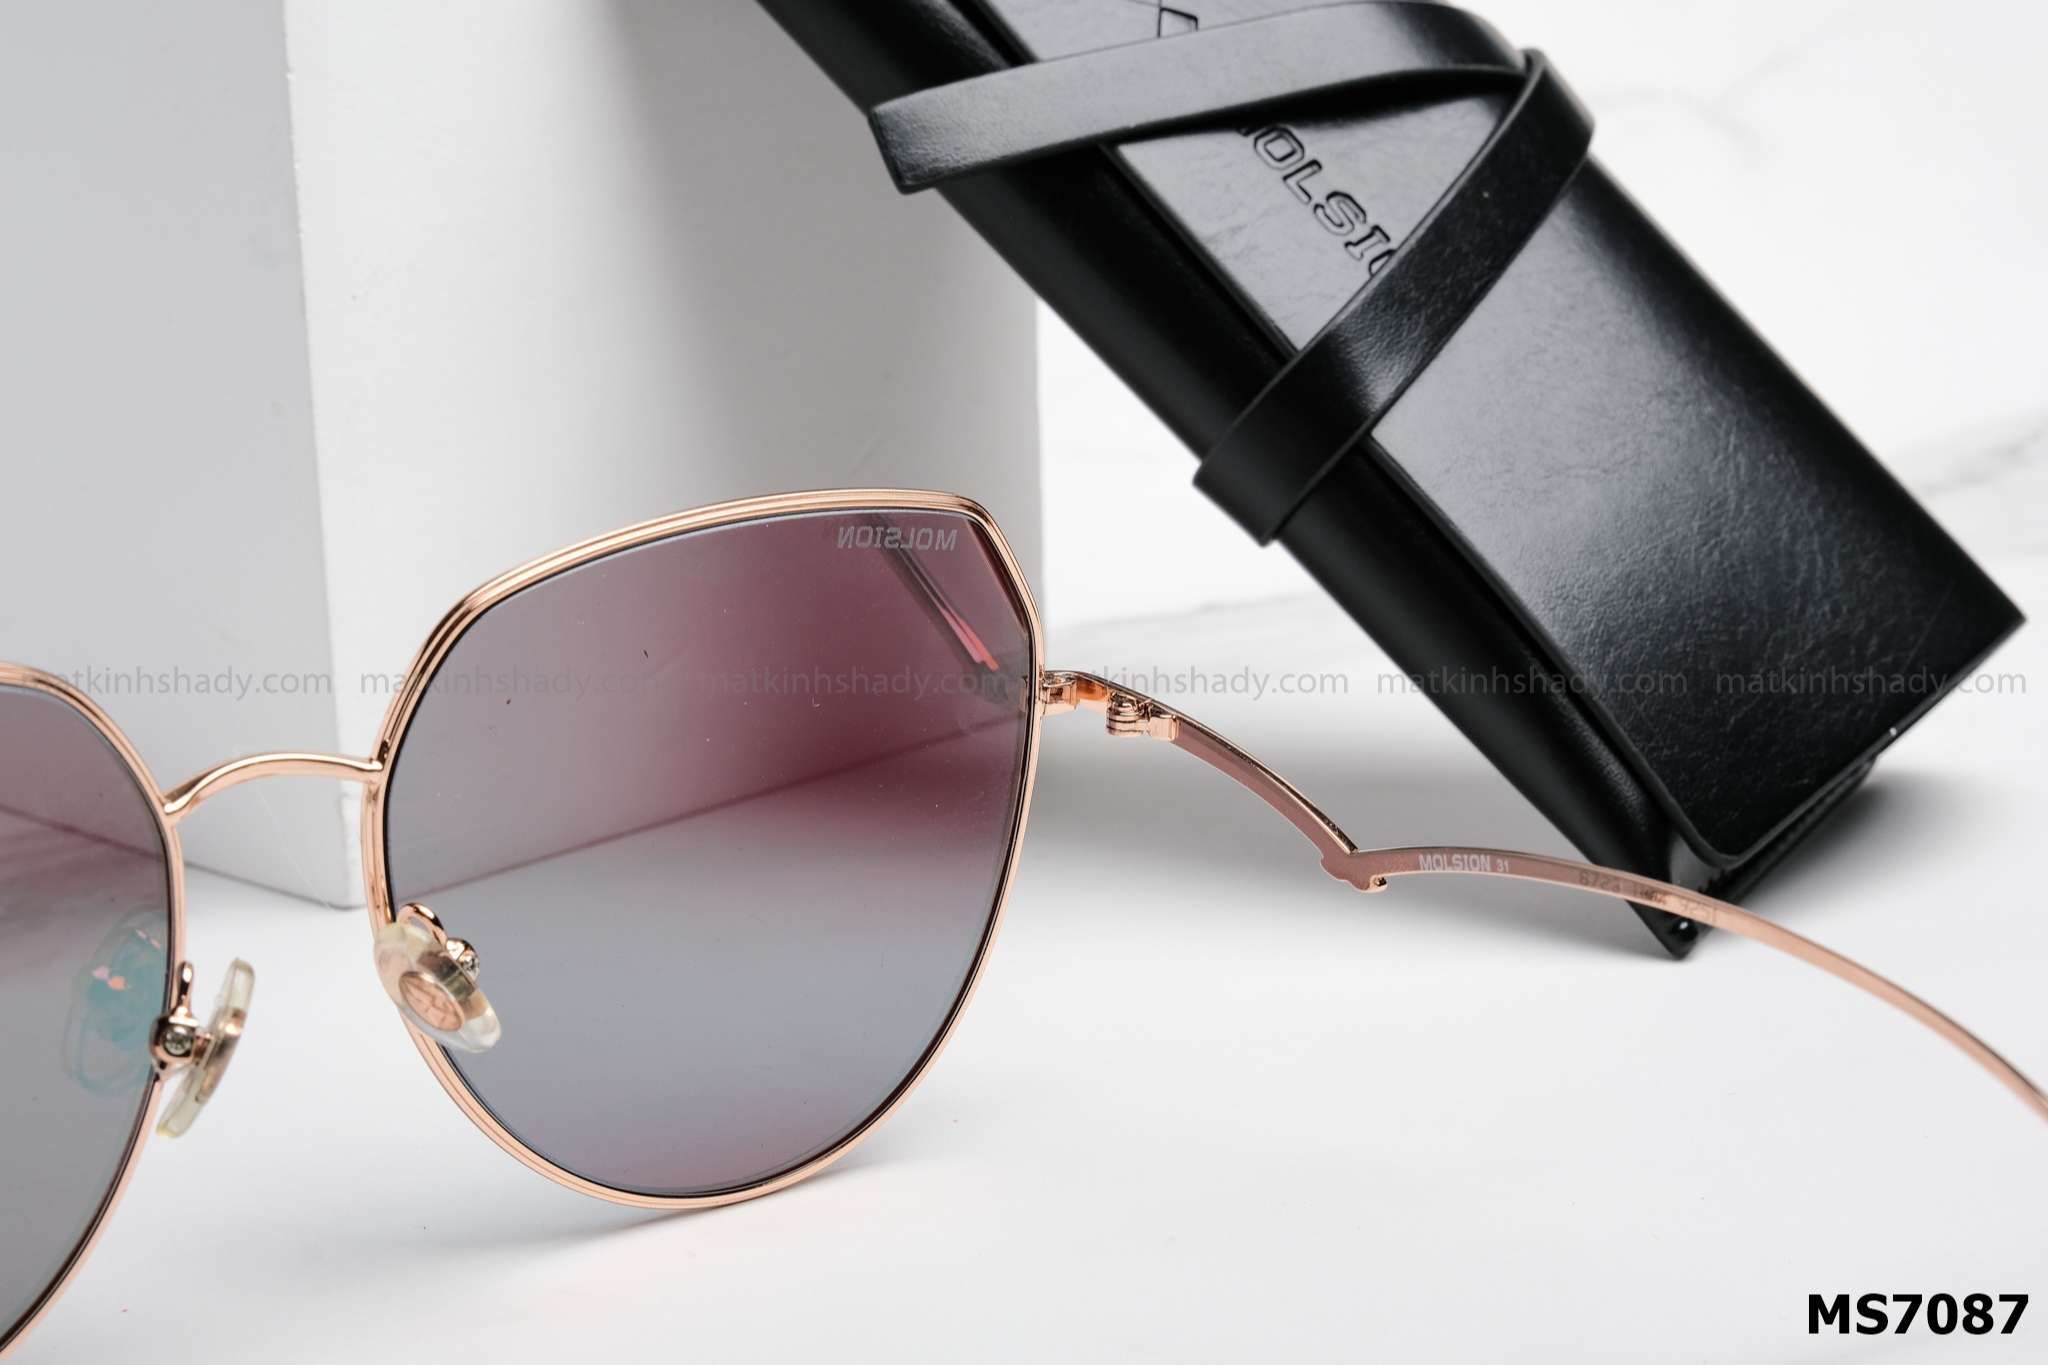  Molsion Eyewear - Sunglasses - MS7087 